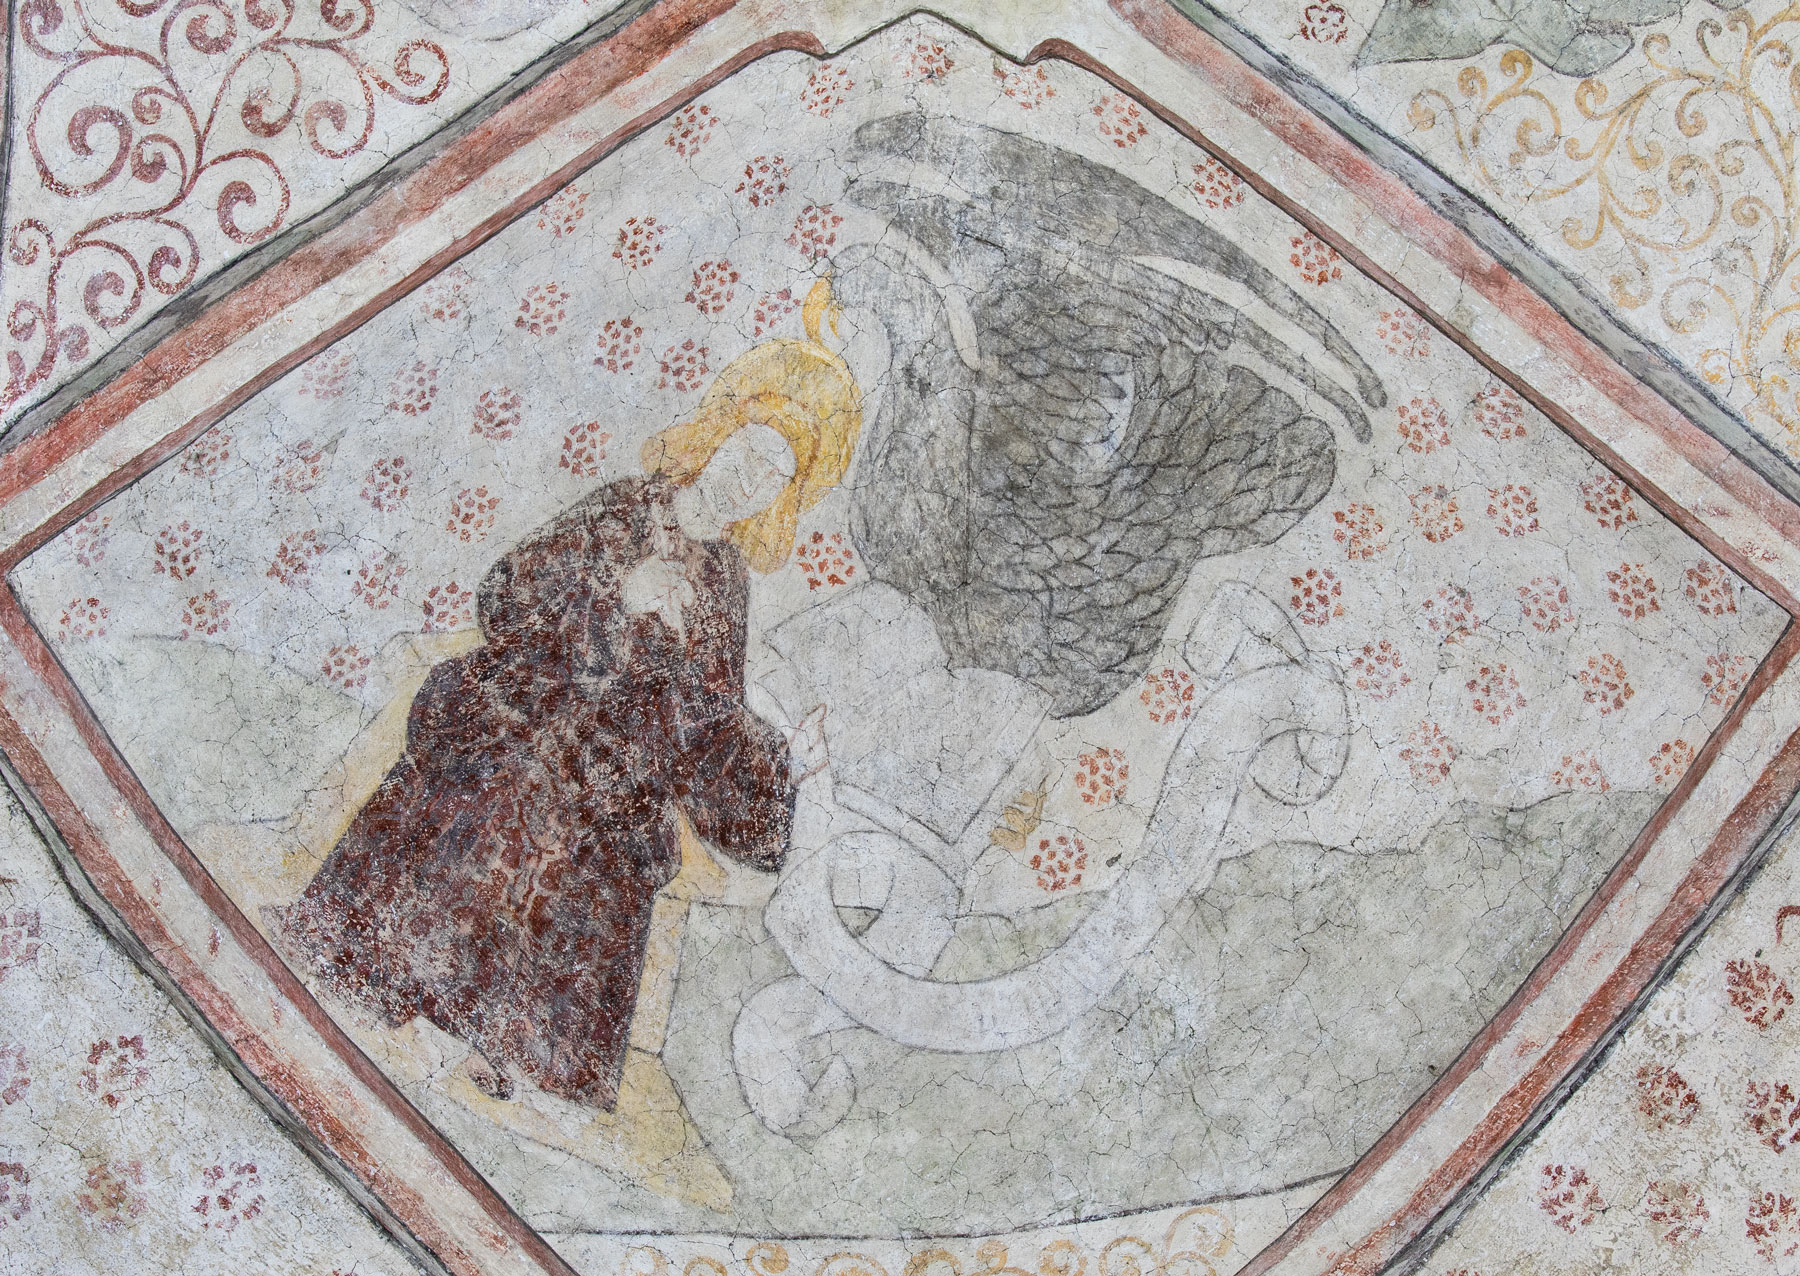 Evangelisten Johannes med sin symbol, örnen - Nederluleå kyrka